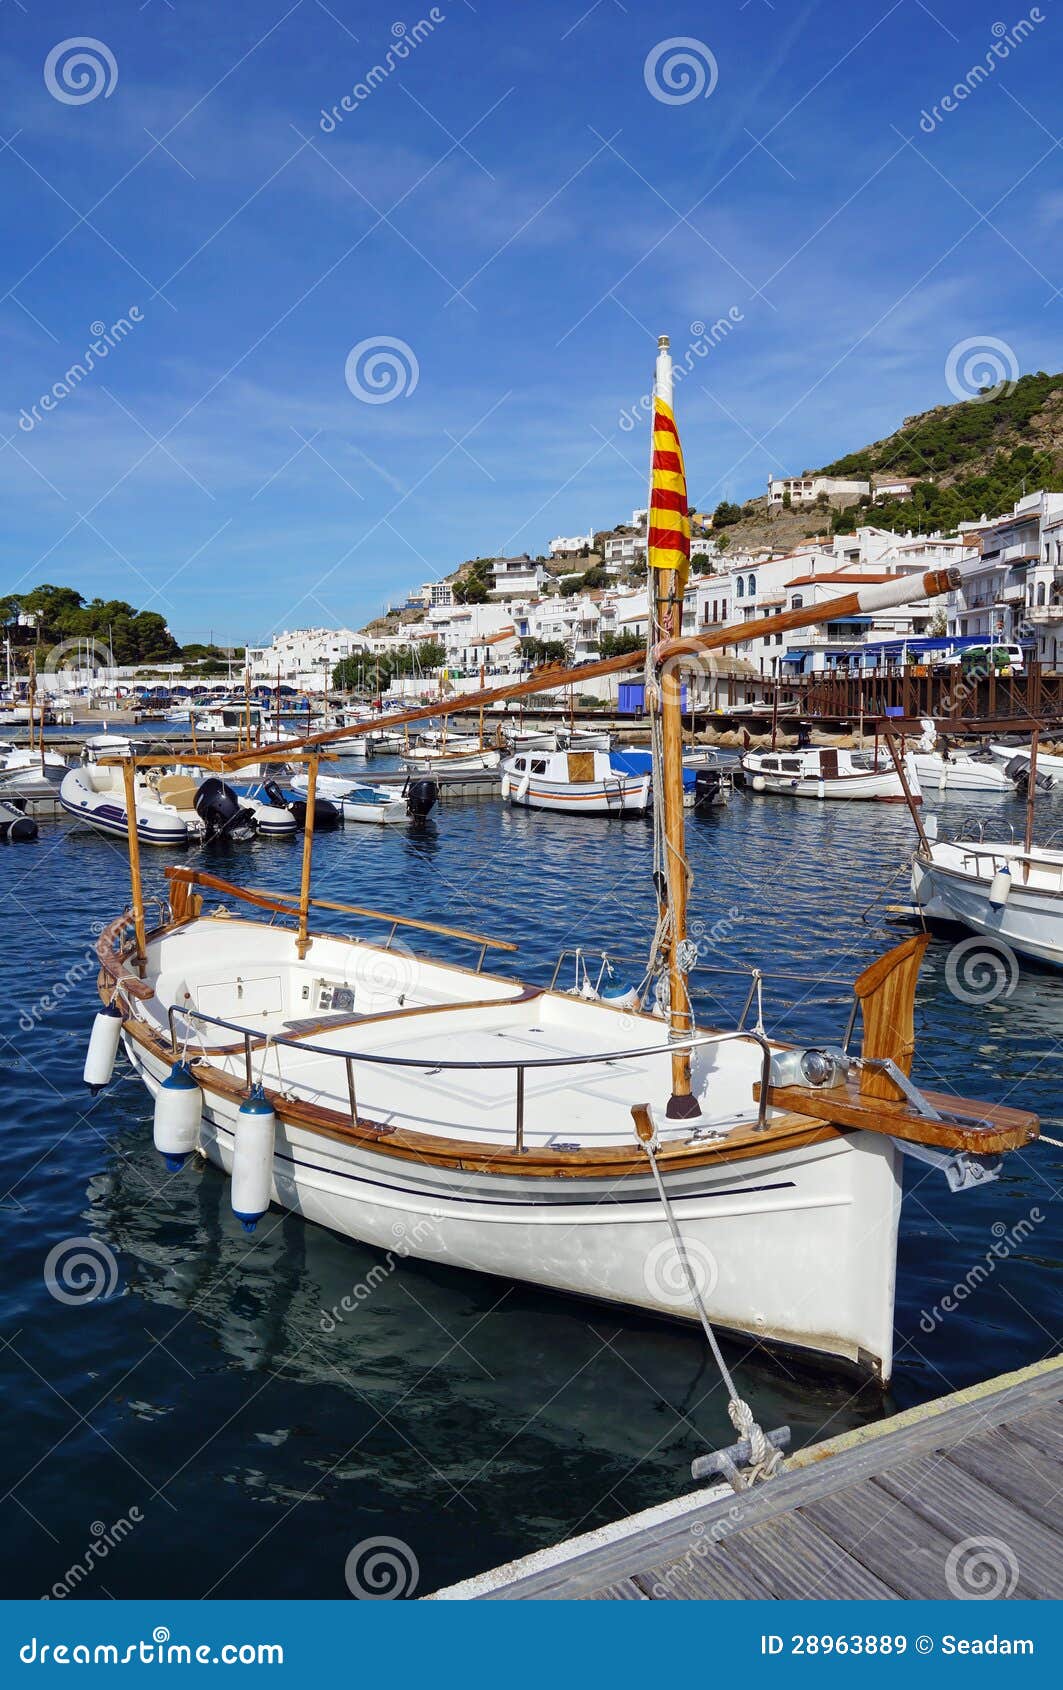 Catalan Boat At Dock In The Mediterranean Sea Stock Image 